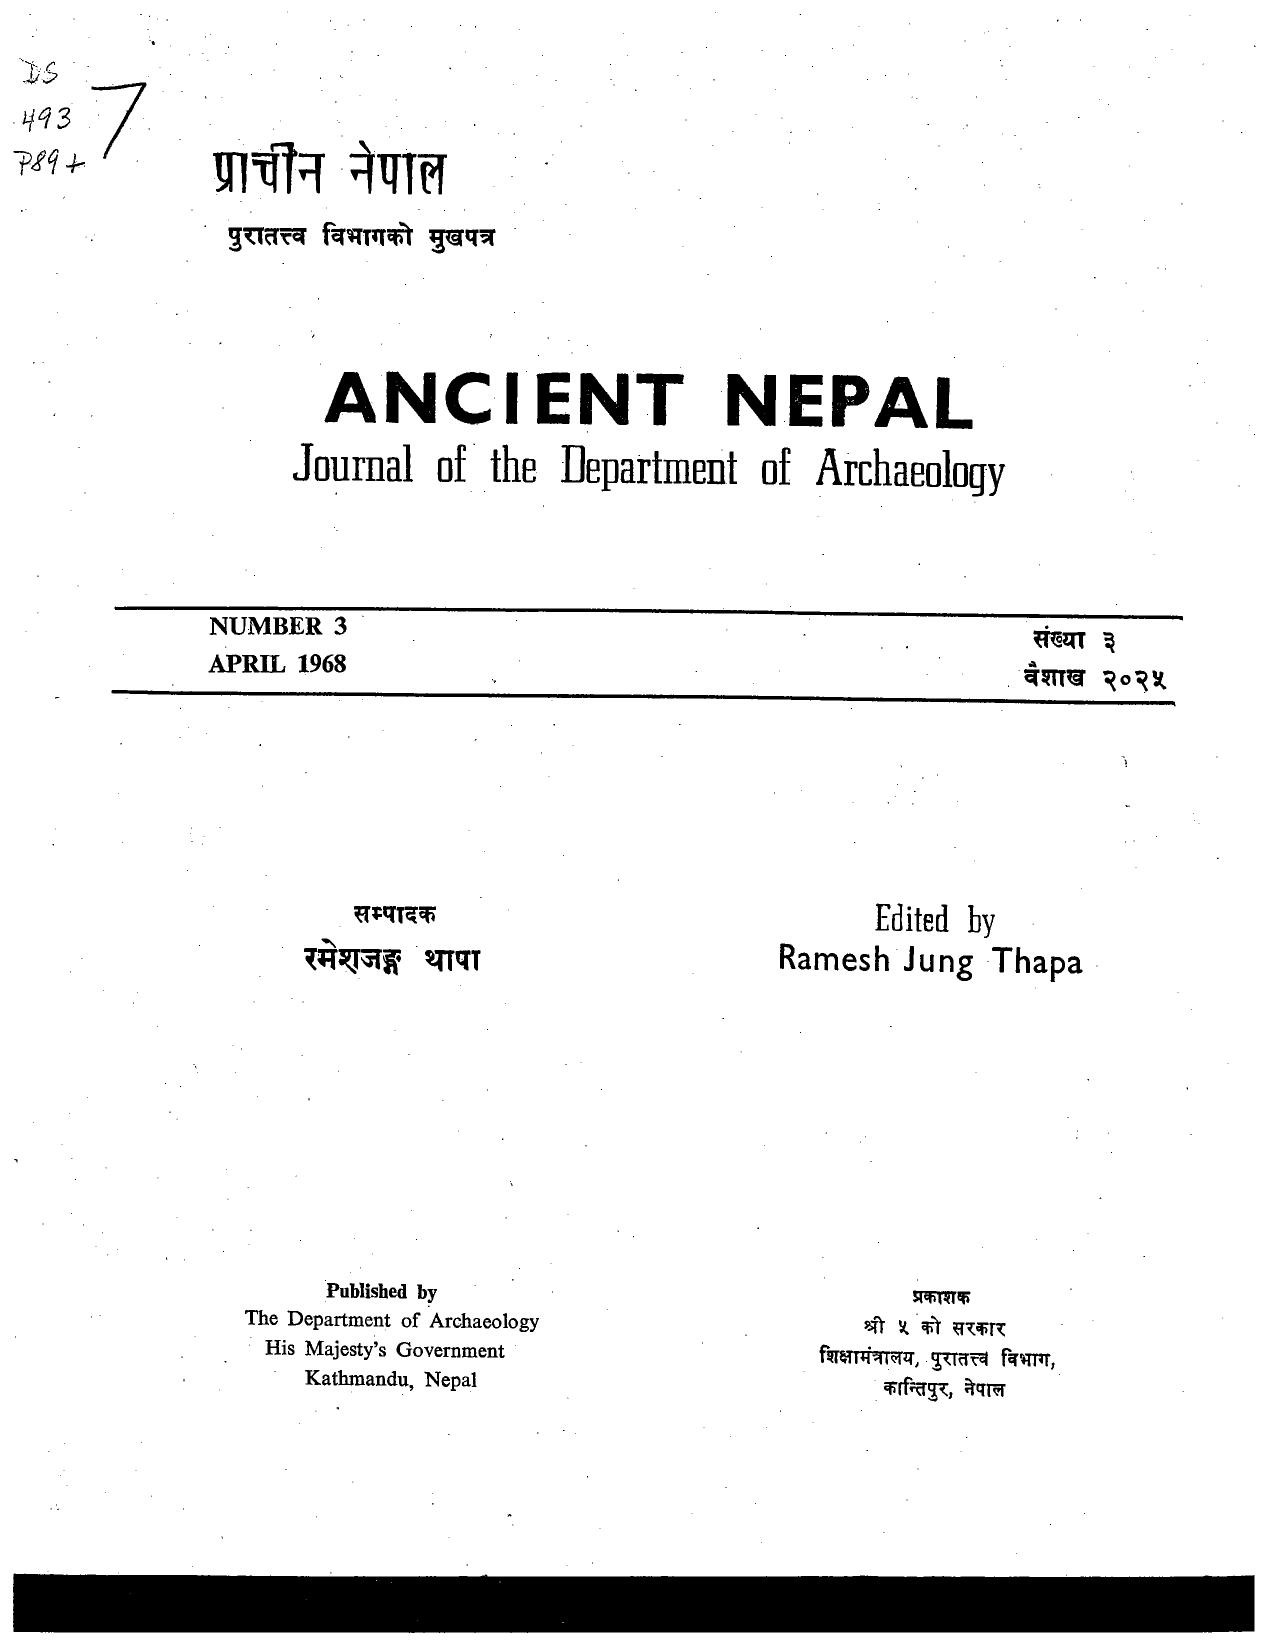 Ancient Nepal 03